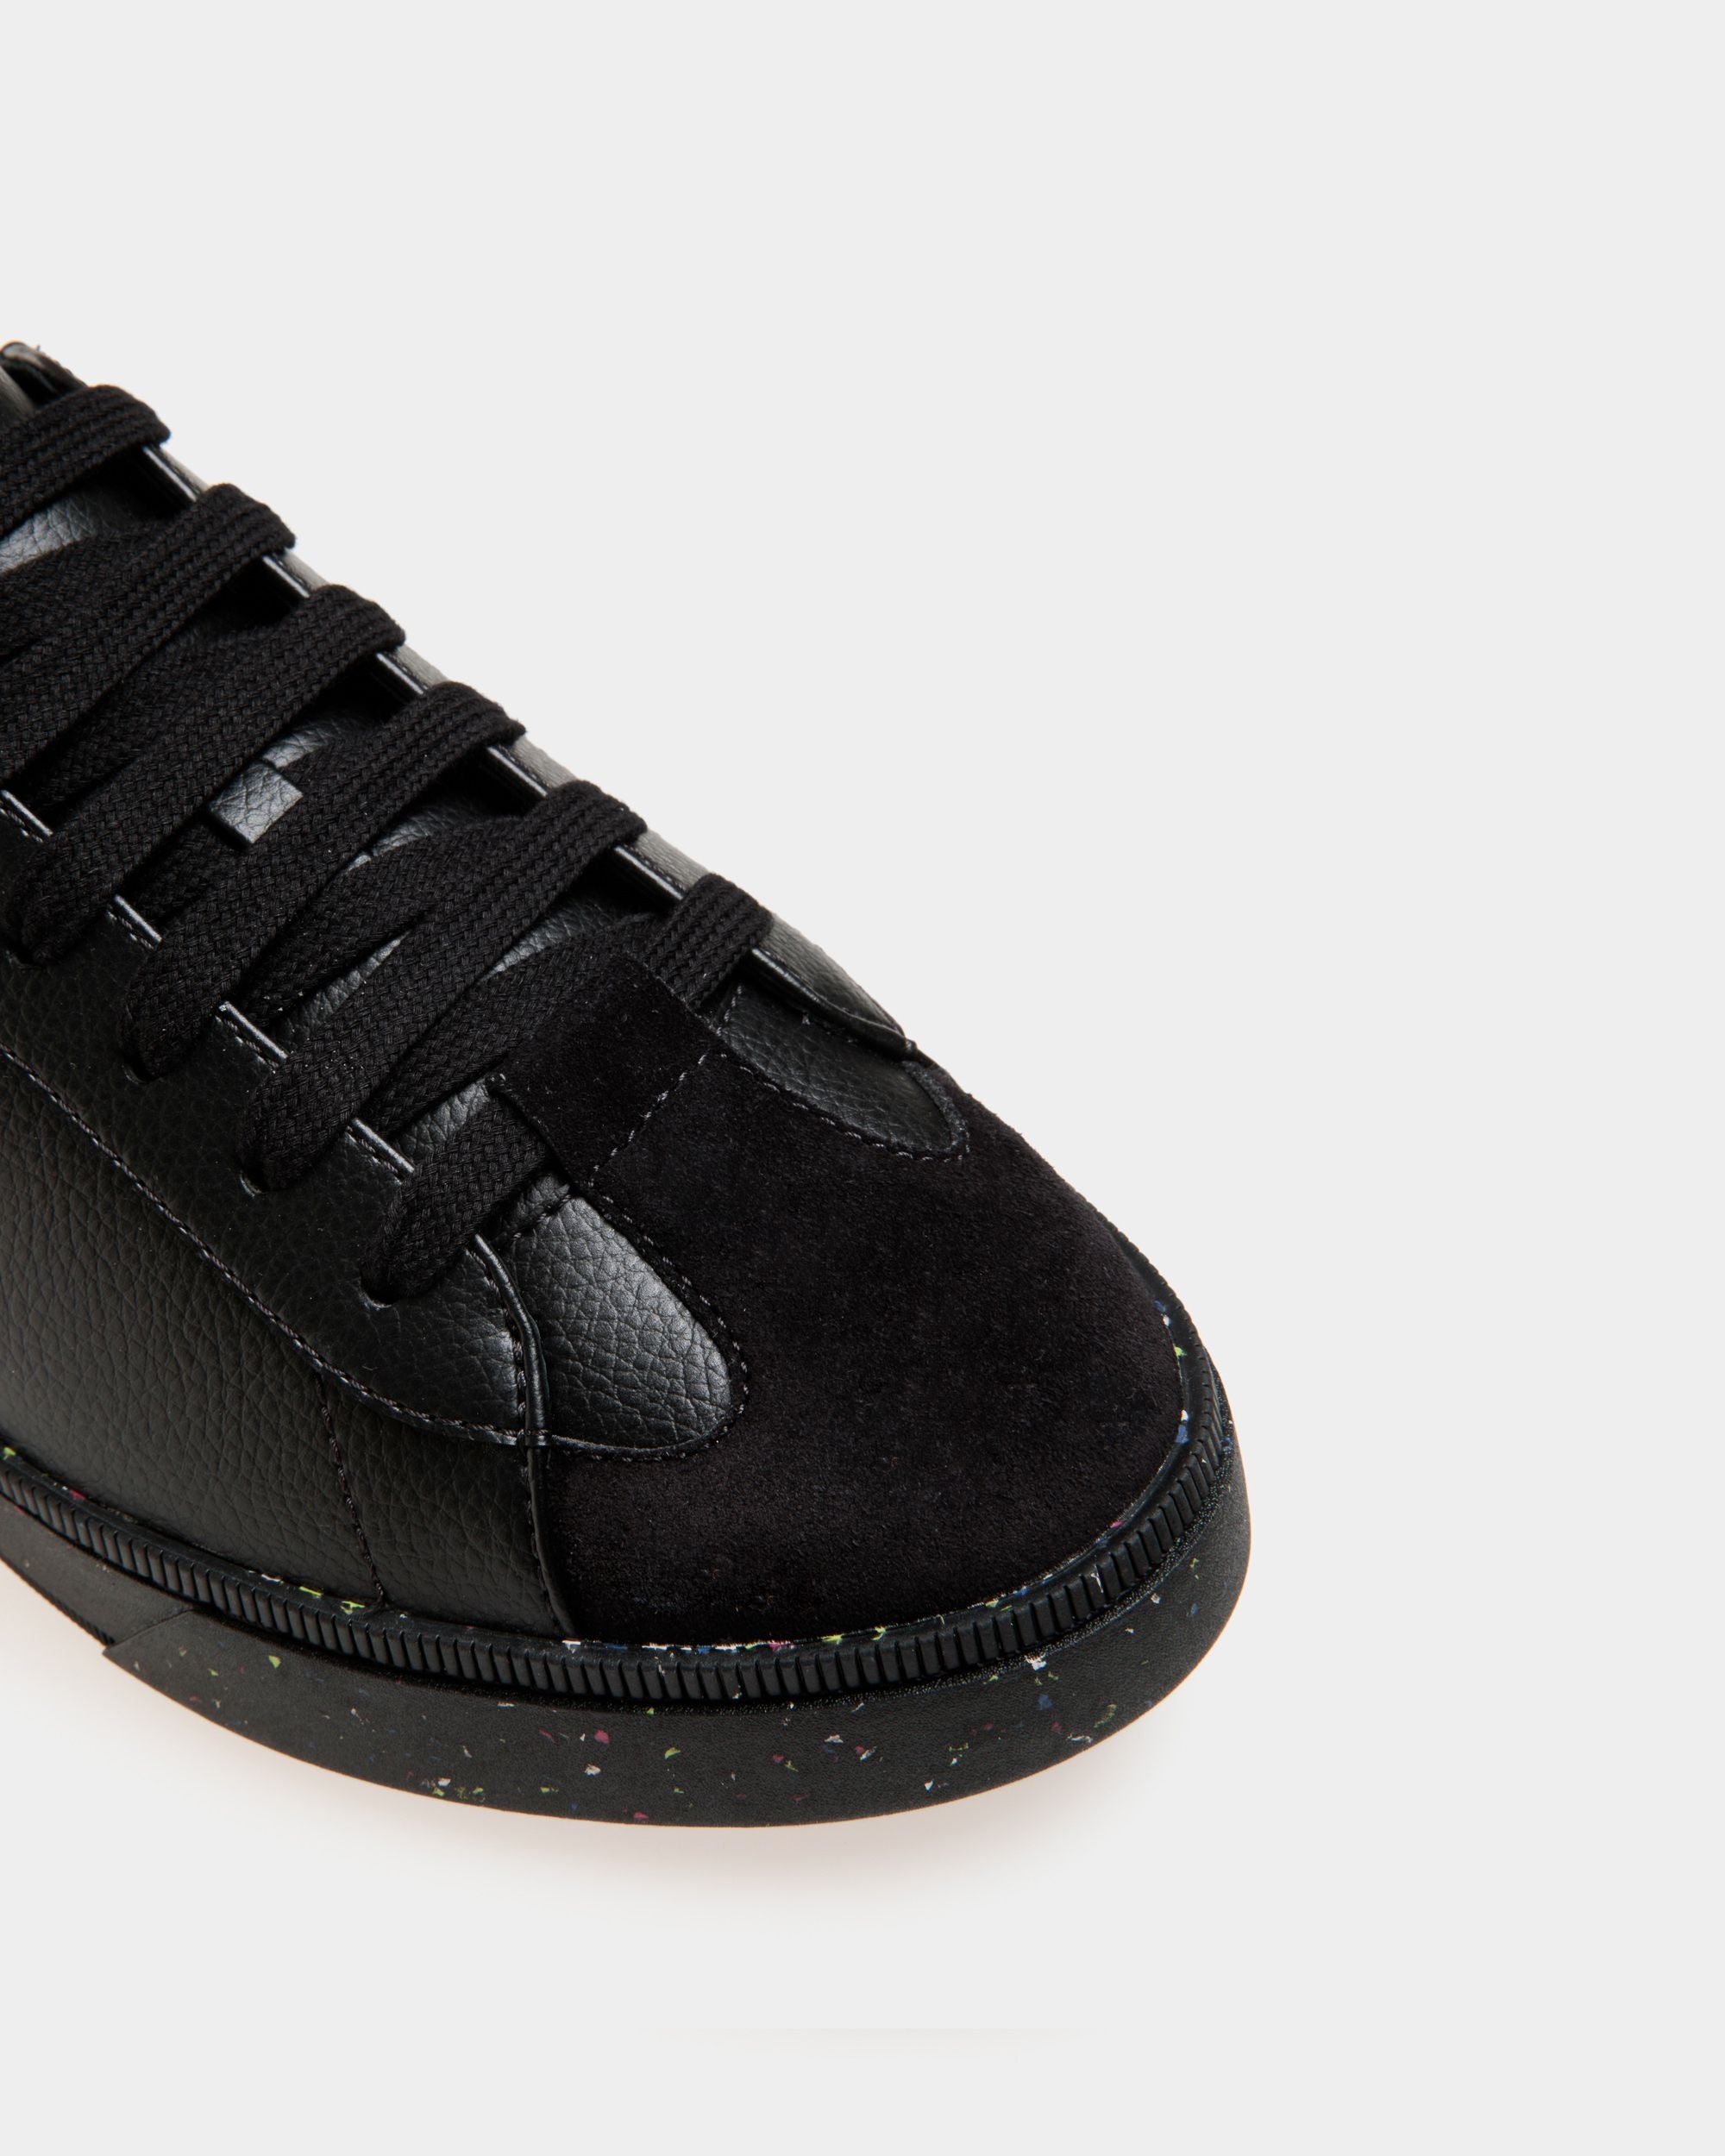 Raise | Men's Sneaker in Black Faux Leather | Bally | Still Life Detail